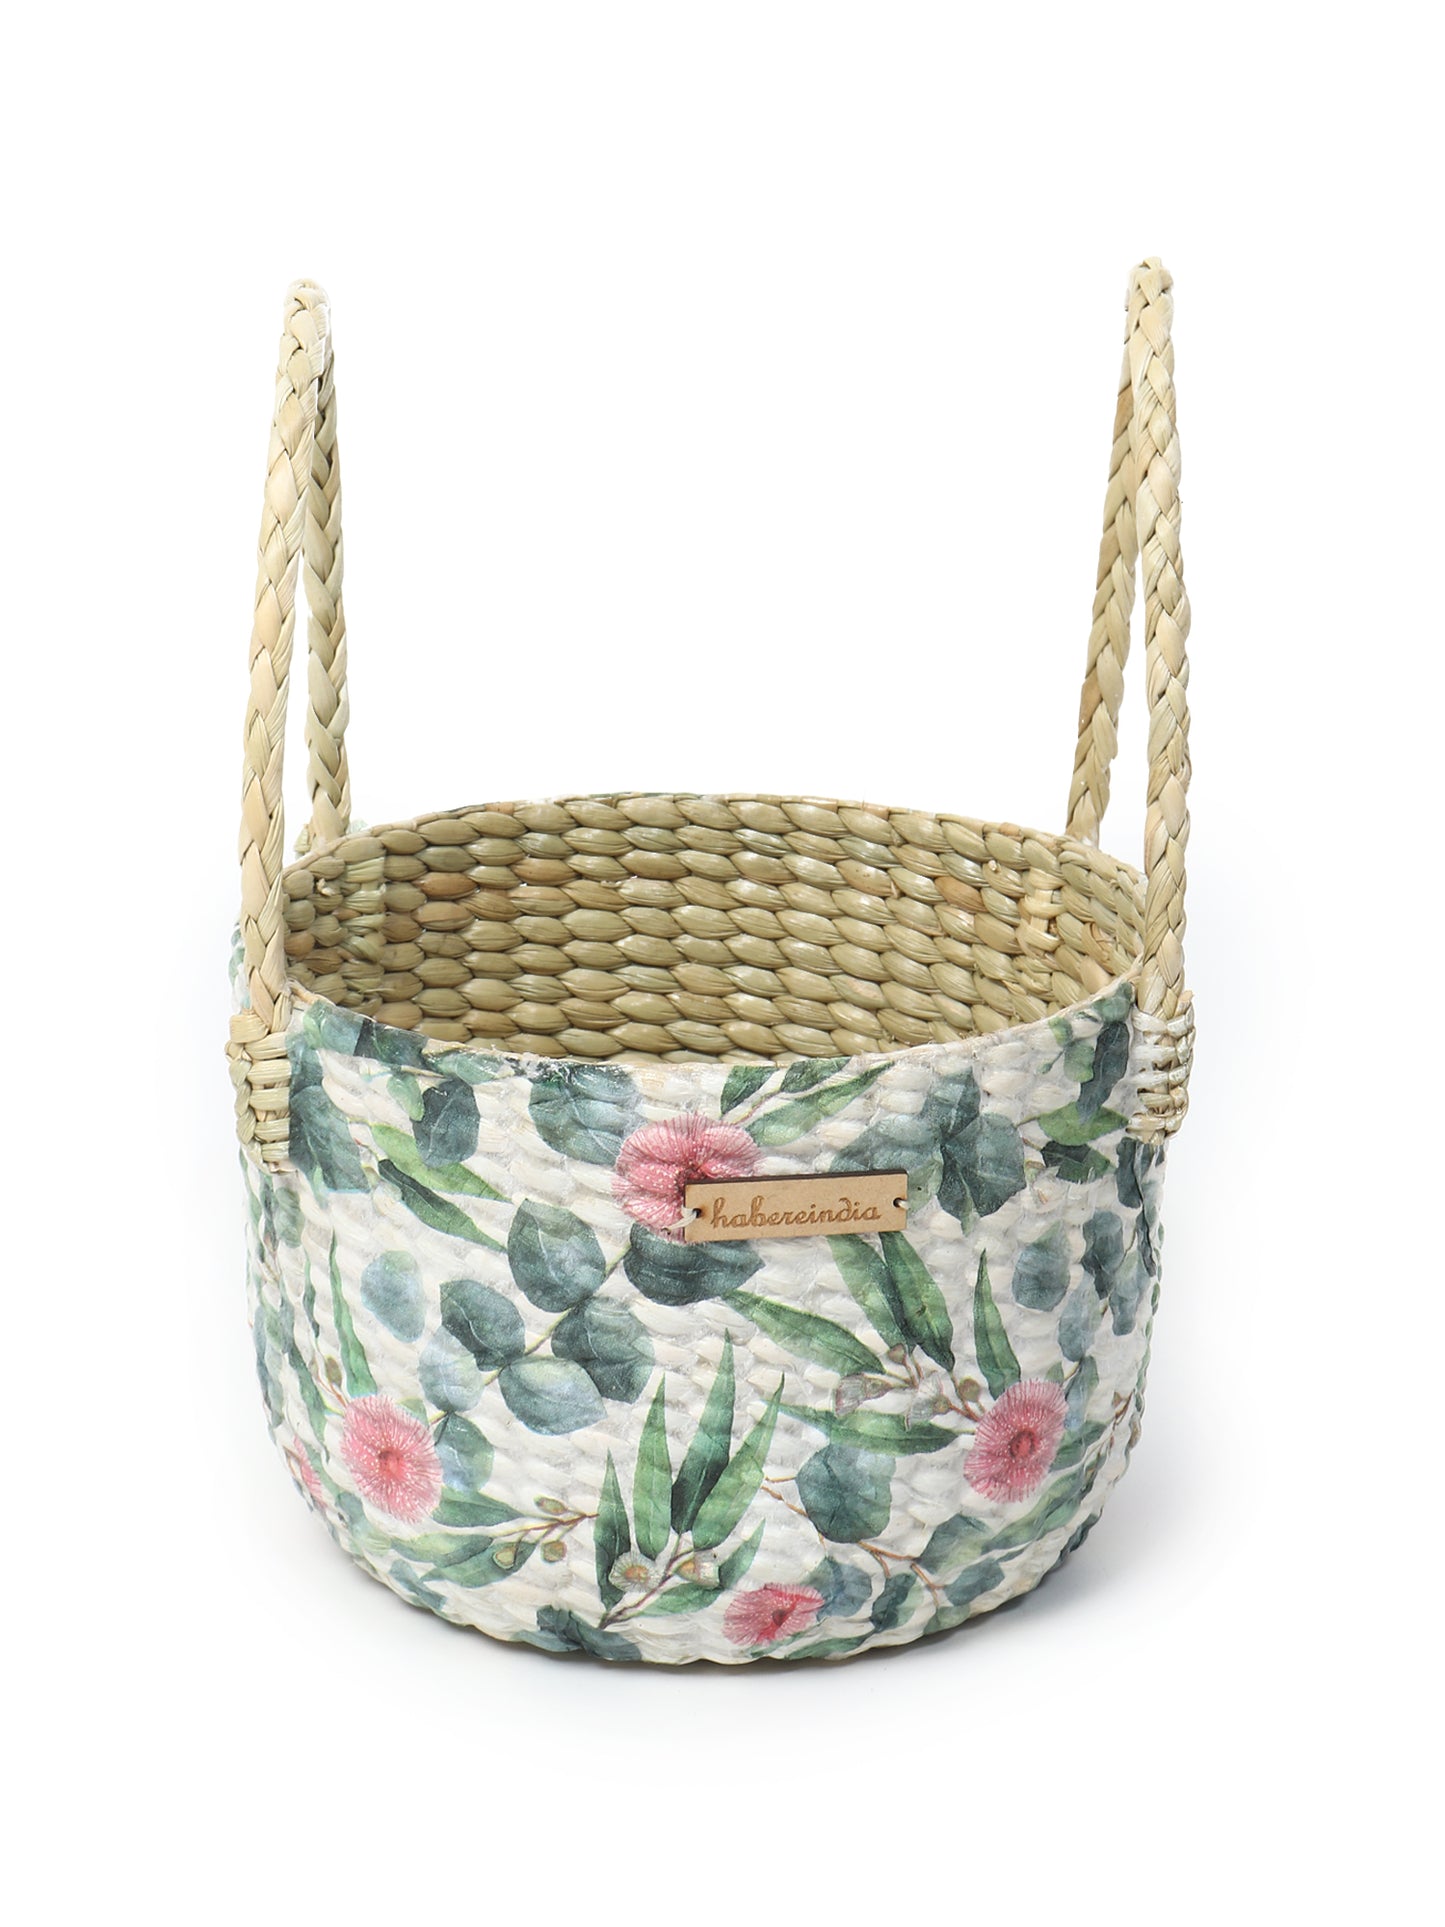 Seagrass Fruit Basket